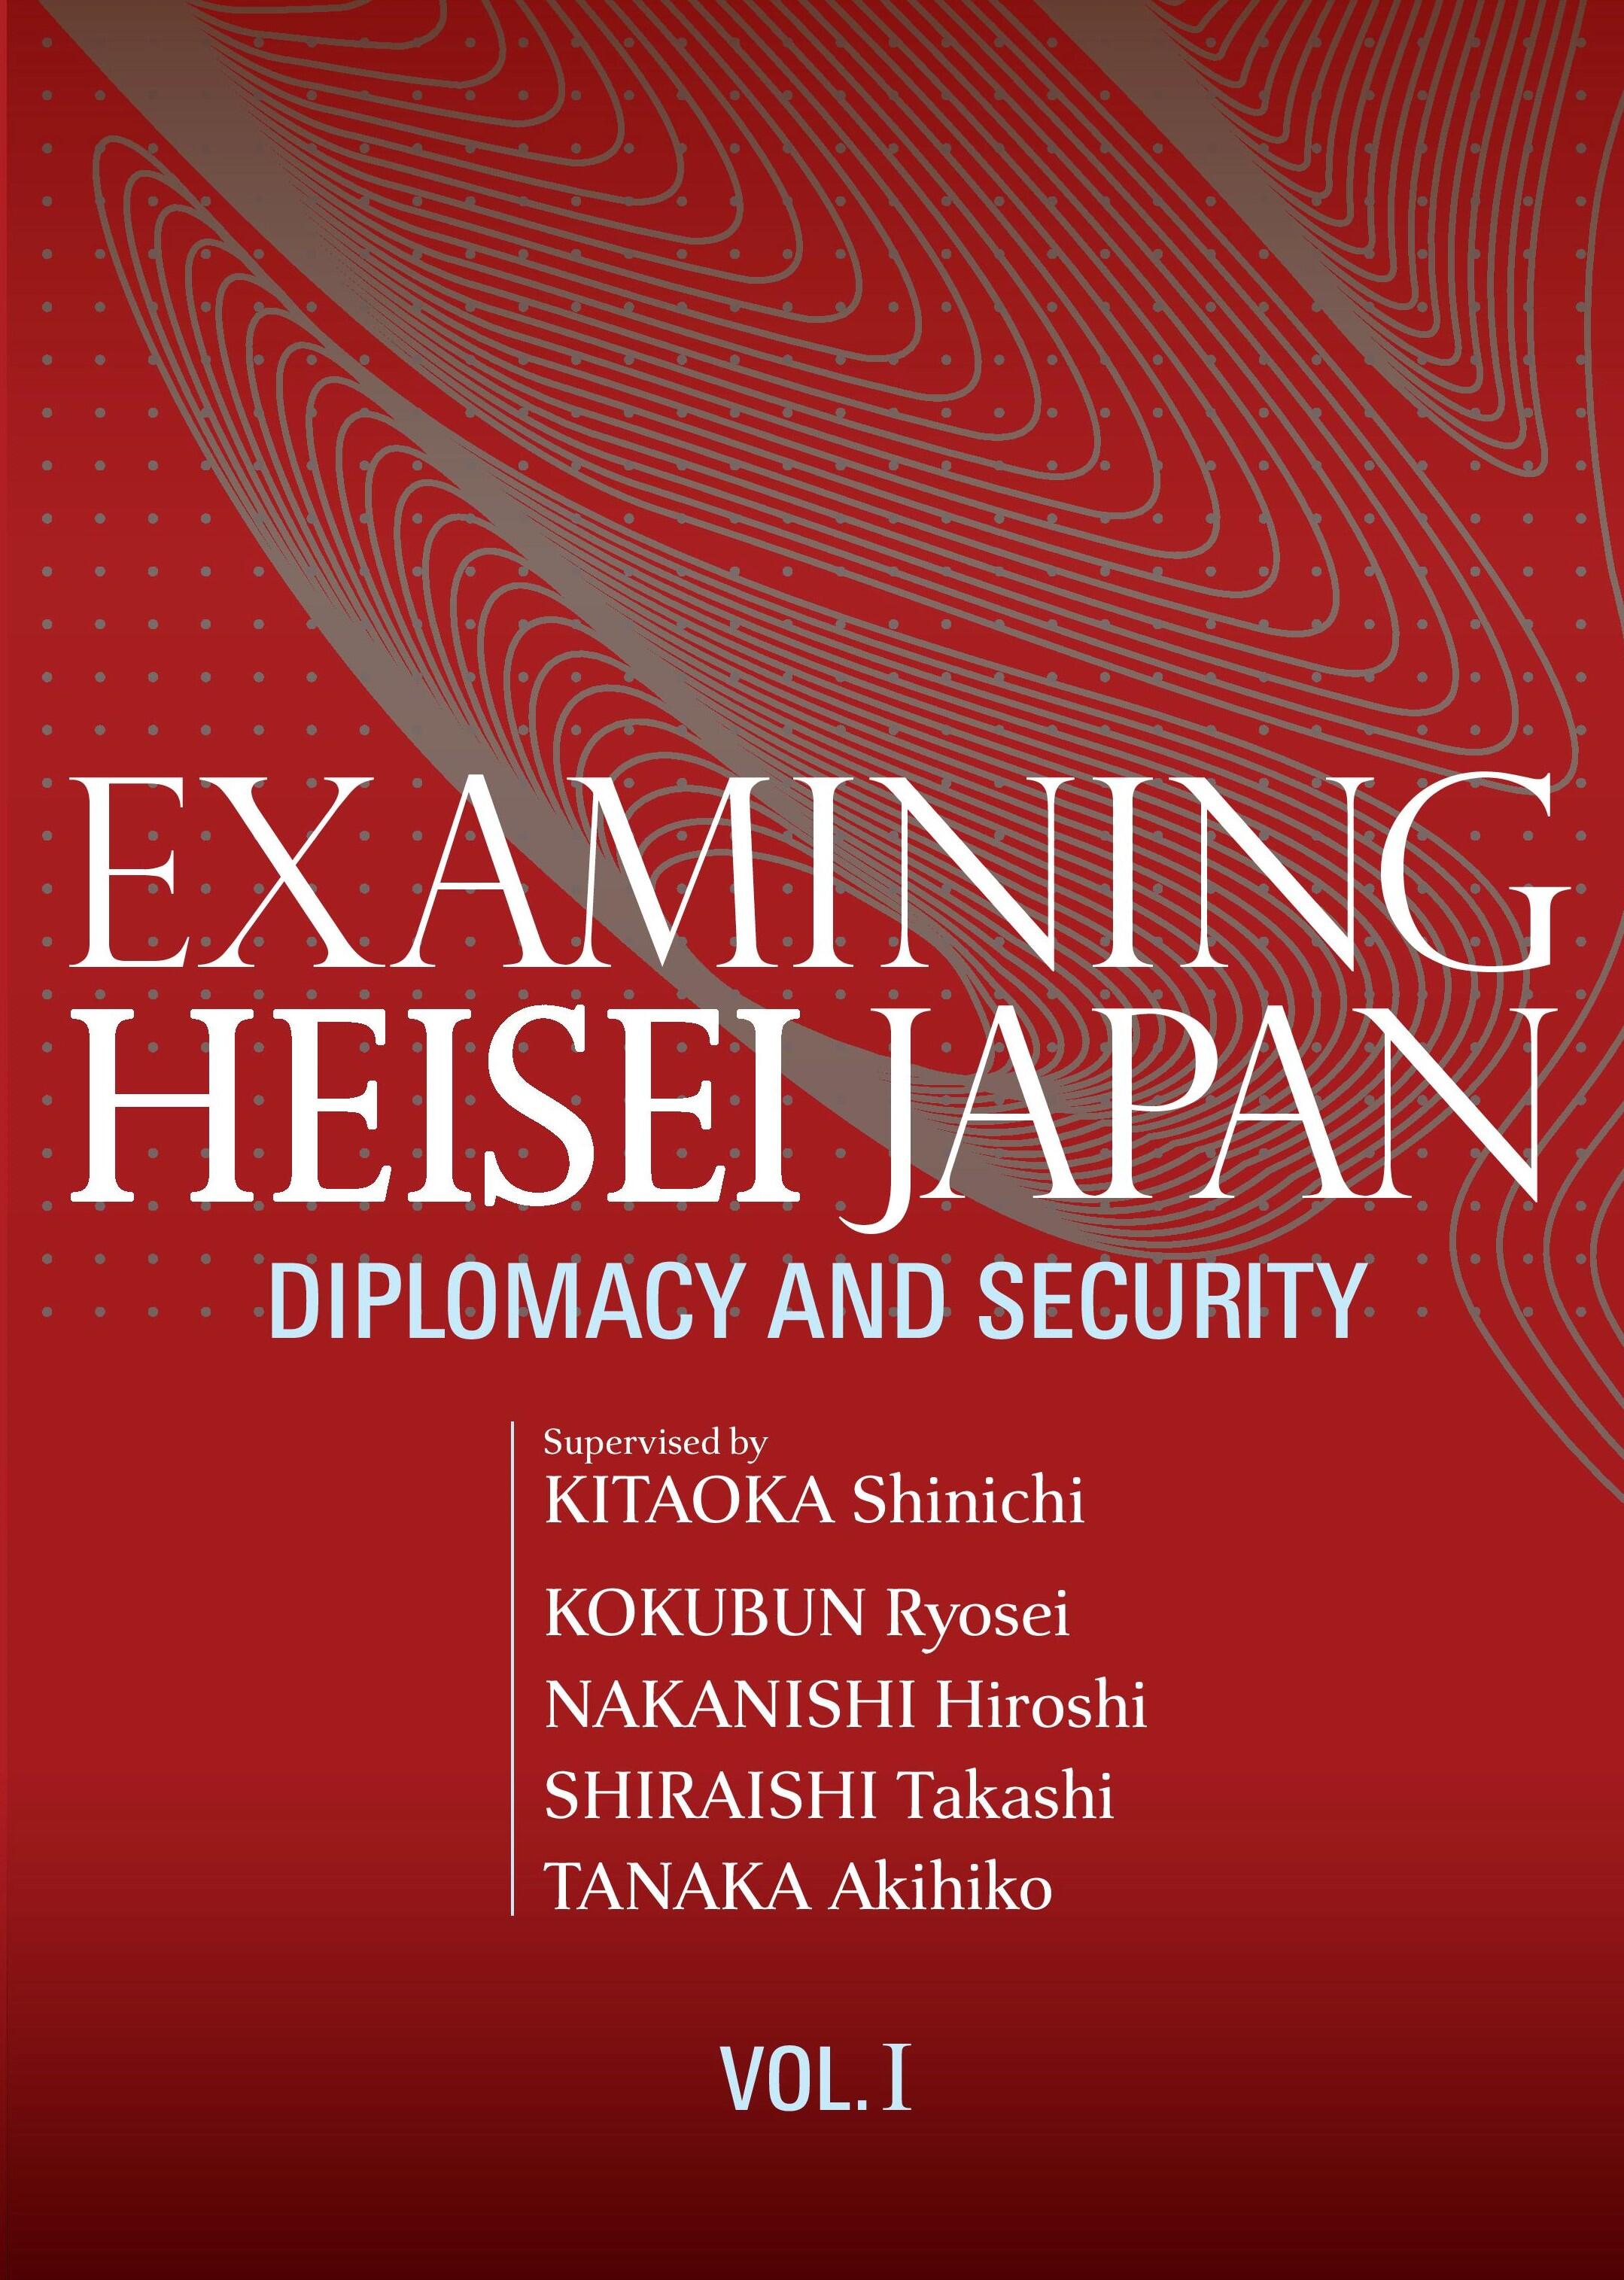 Examining Heisei Japan, Vol. I